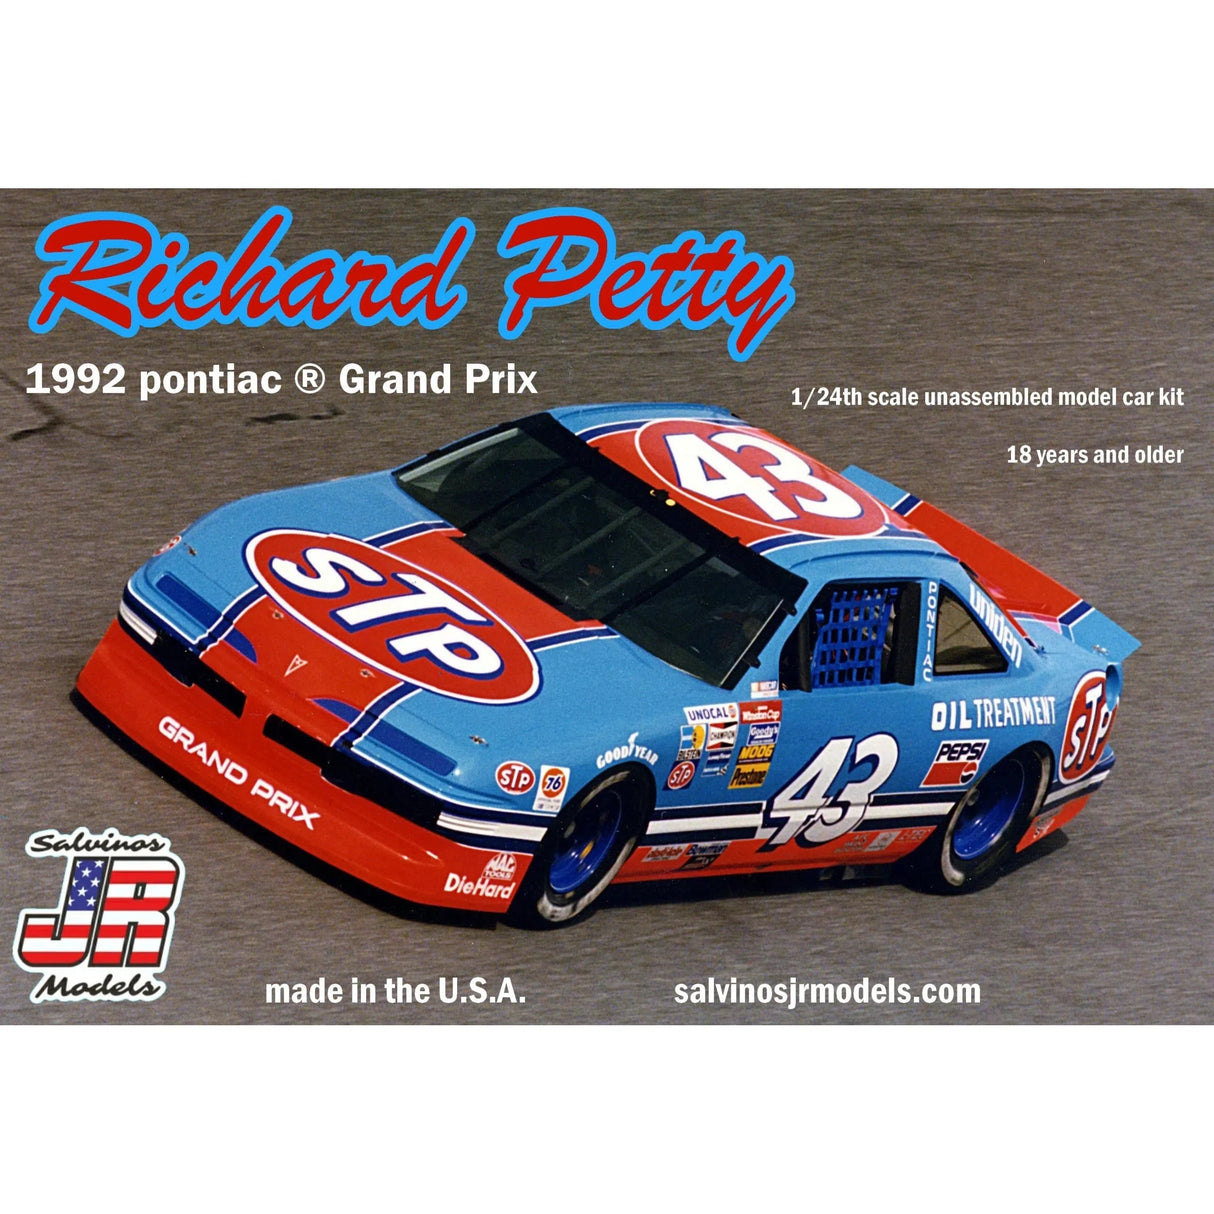 Salvinos JR Models Richard Petty 1992 Pontiac GP